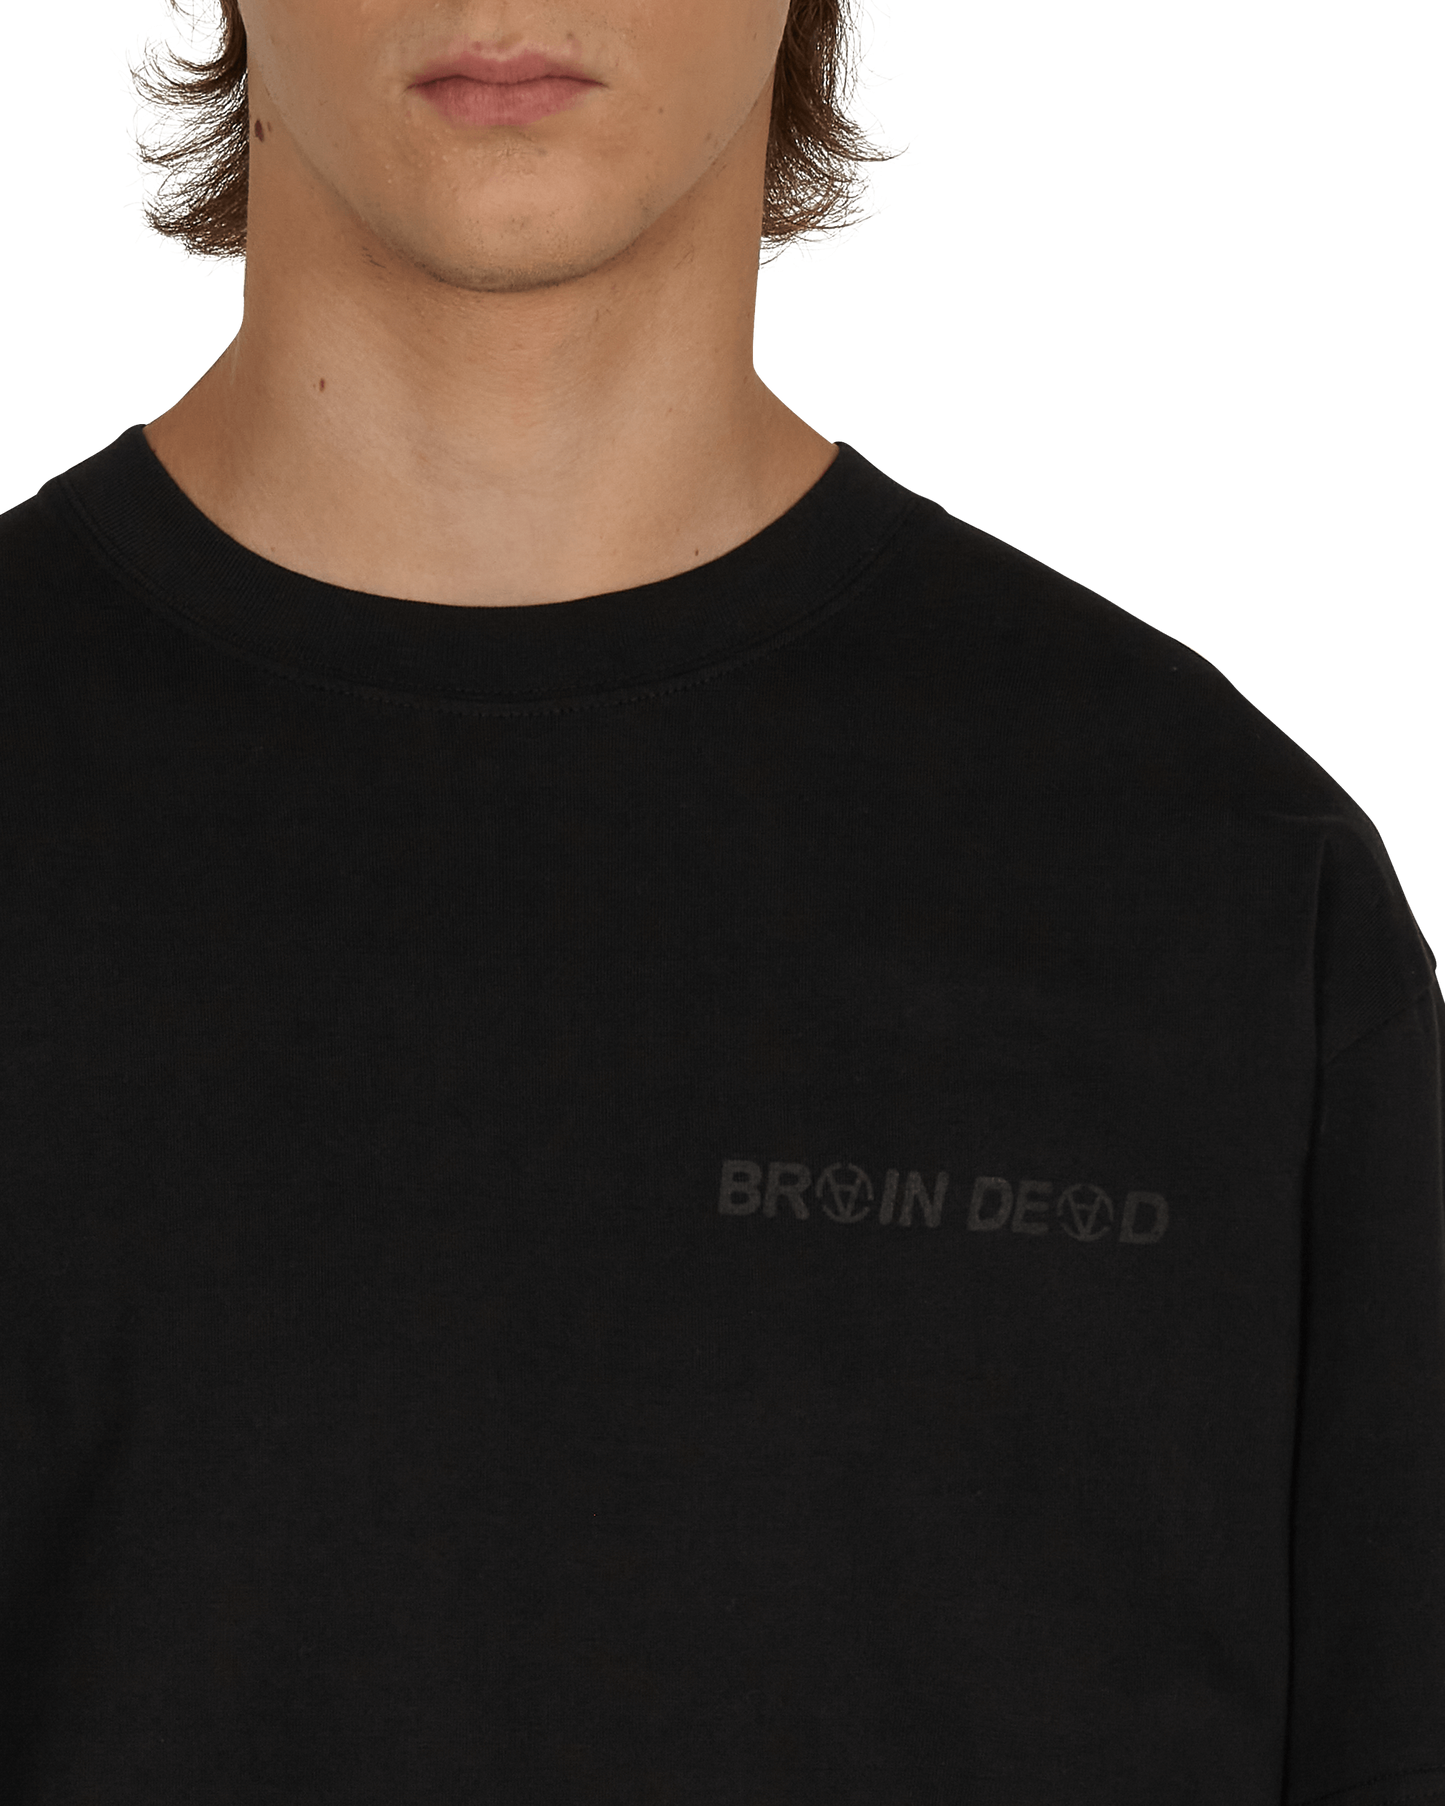 Brain Dead Digi Anarchy Black T-Shirts Shortsleeve BSSJDIGITEE 001